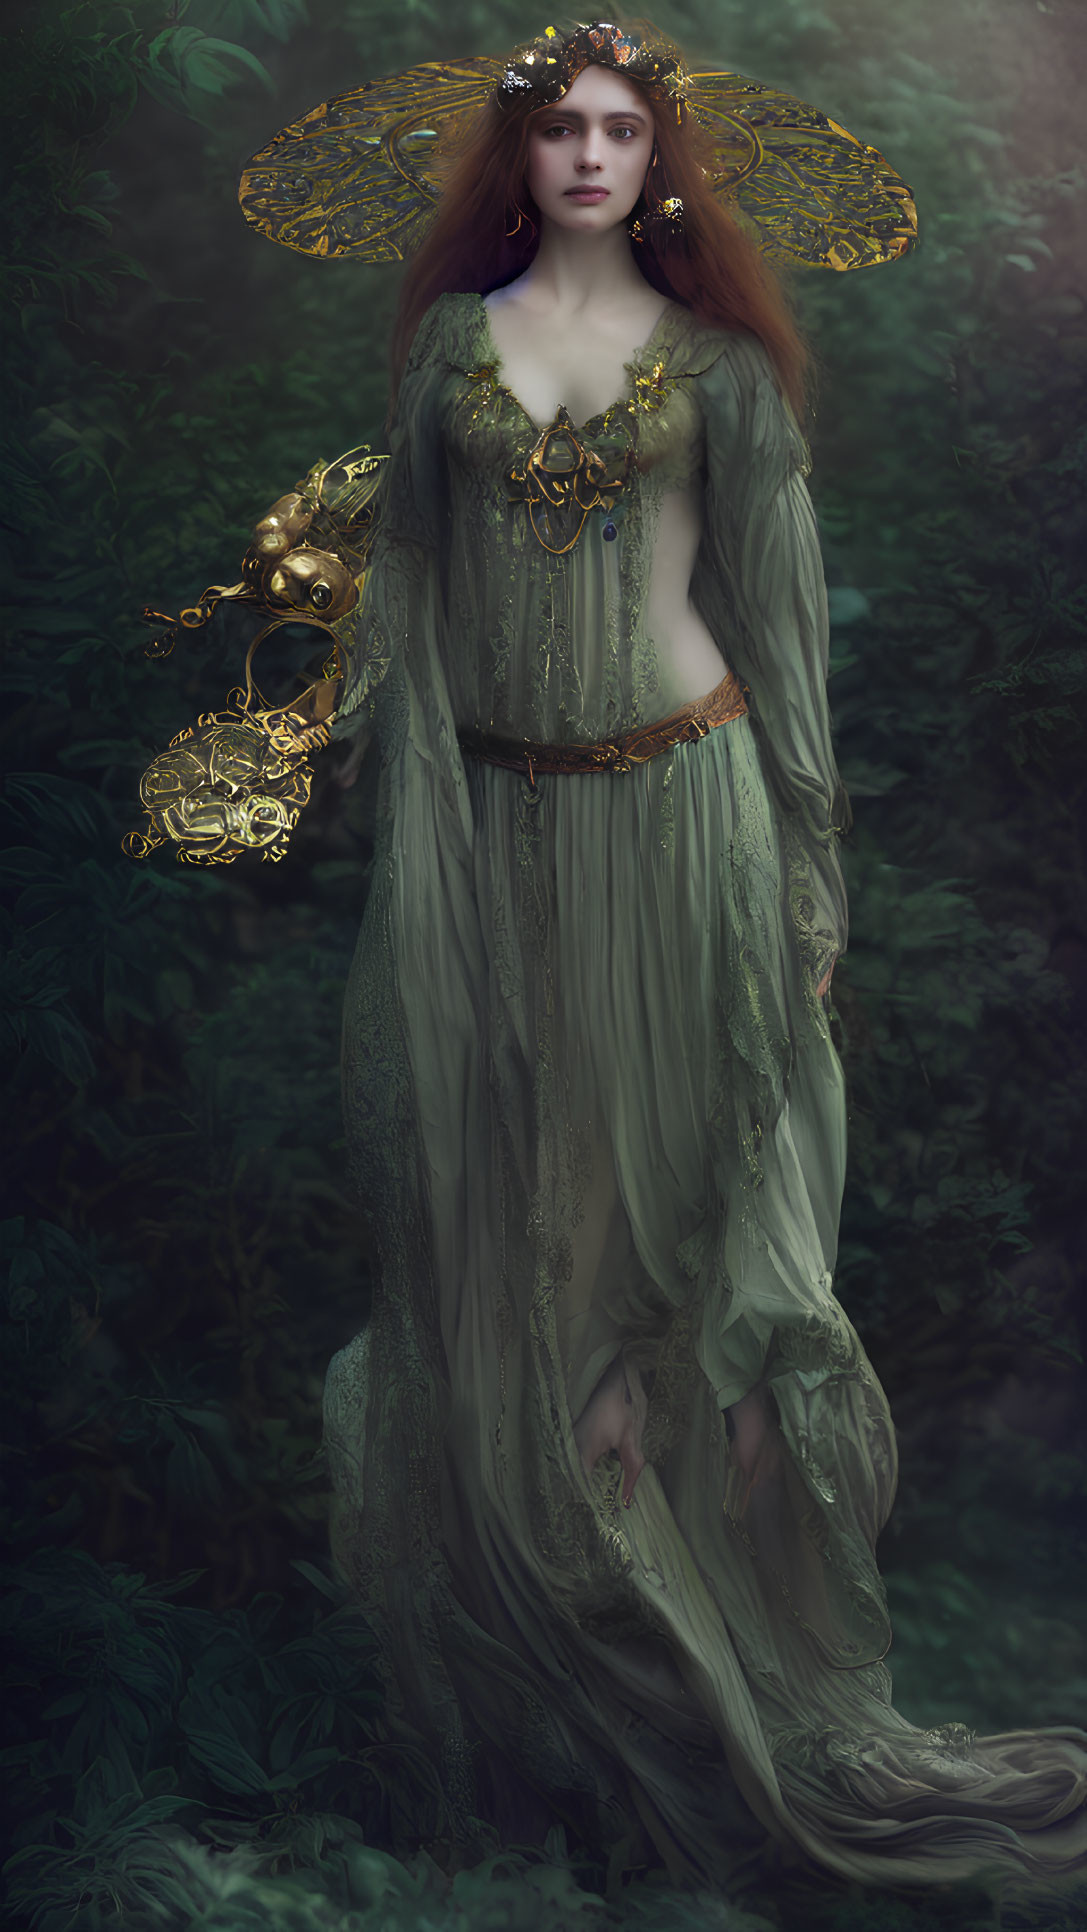 Mystical Female Figure in Green Attire with Golden Accessories in Dark Forest